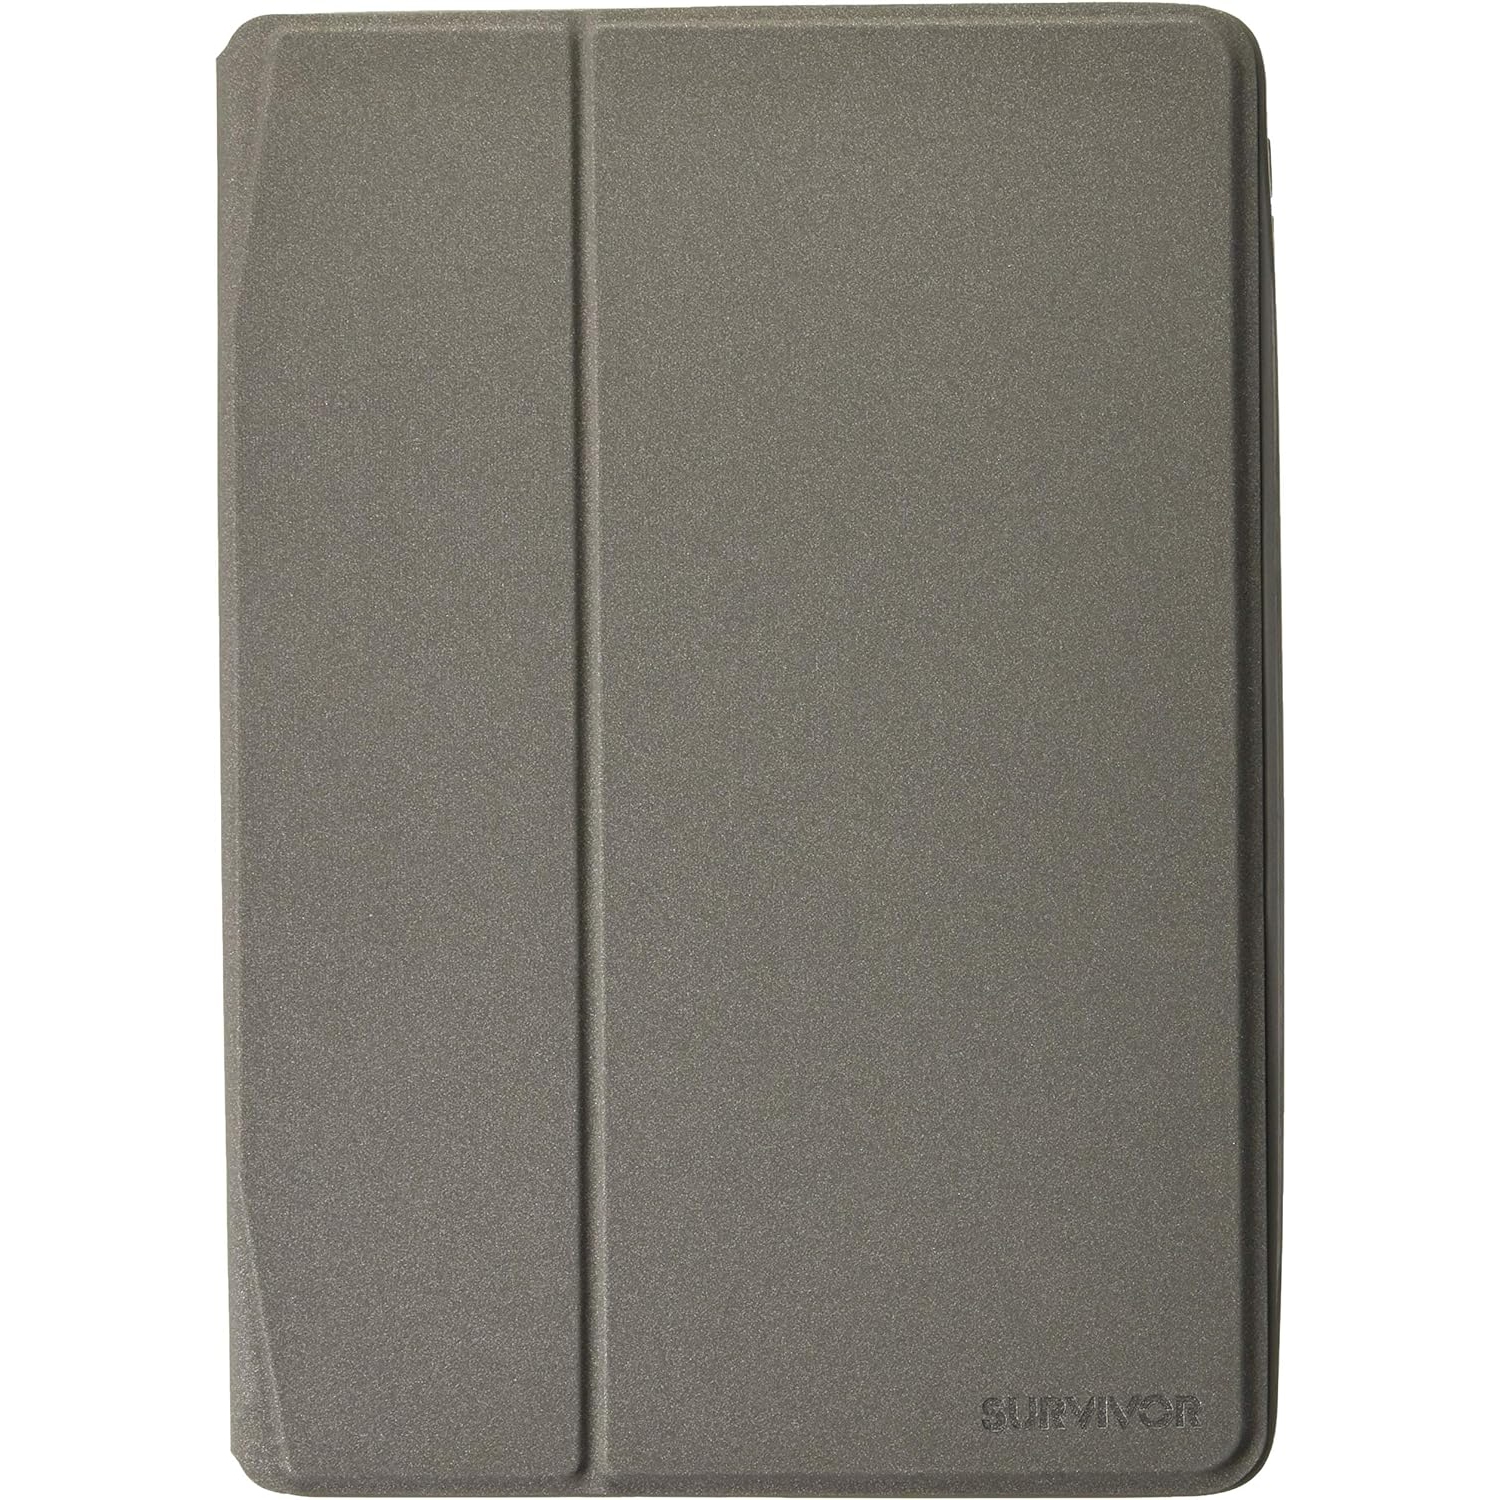 Survivor Journey Folio Case for iPad Pro 10.5 Grey (GB43418)